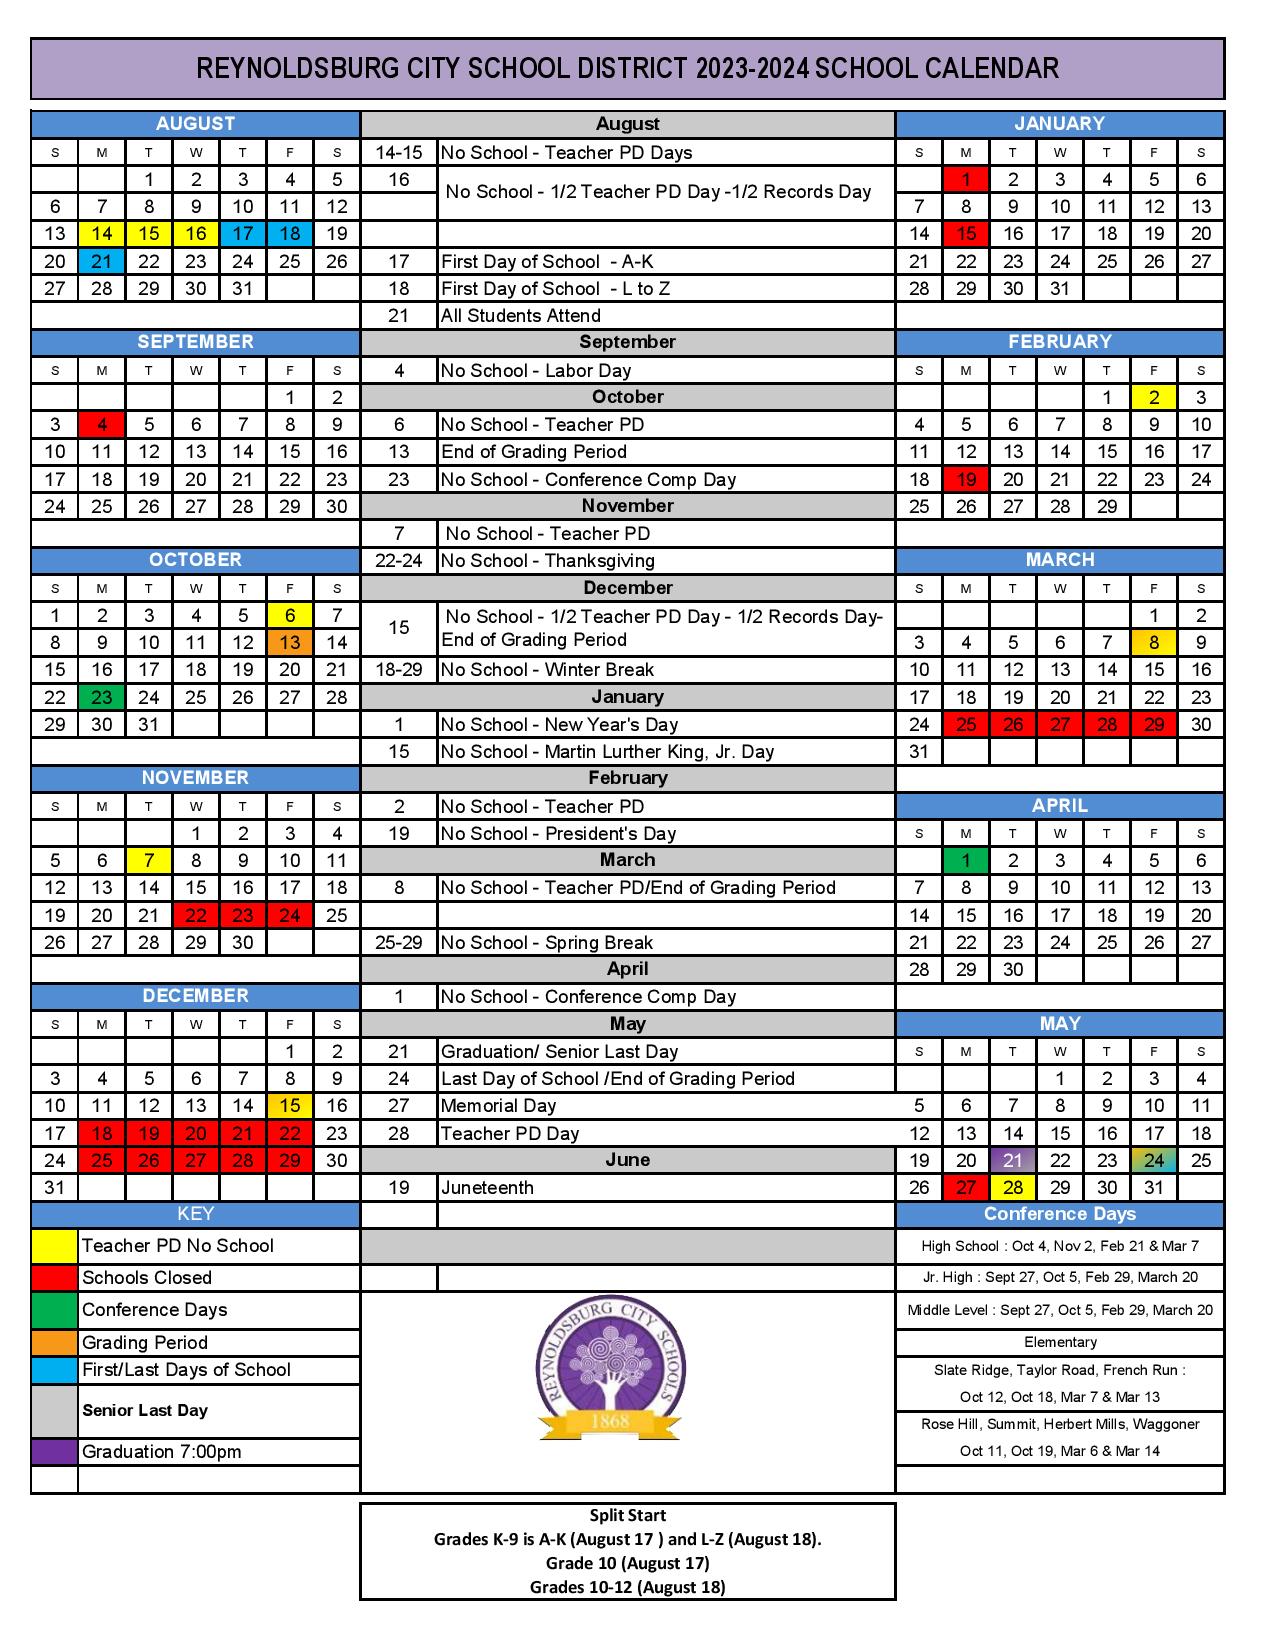 reynoldsburg-city-schools-calendar-2023-2024-in-pdf-school-calendar-info